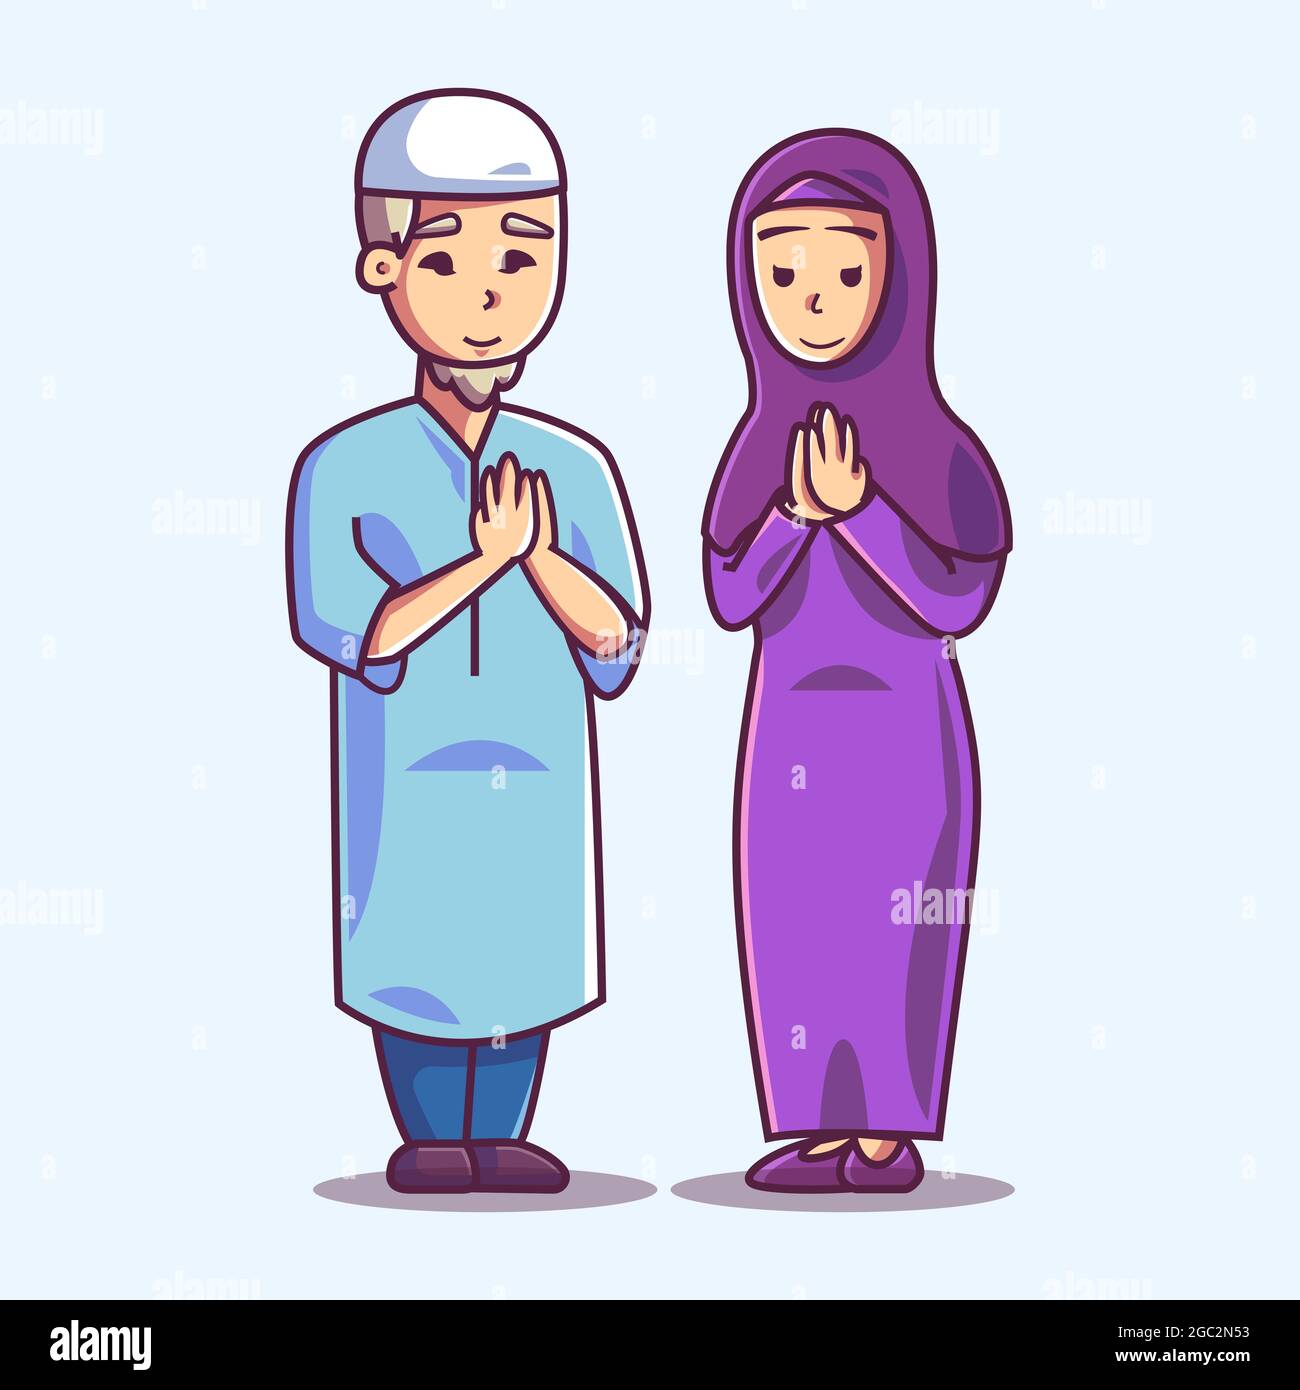 Muslim couple character. Cartoon illustration style Stock Vector ...